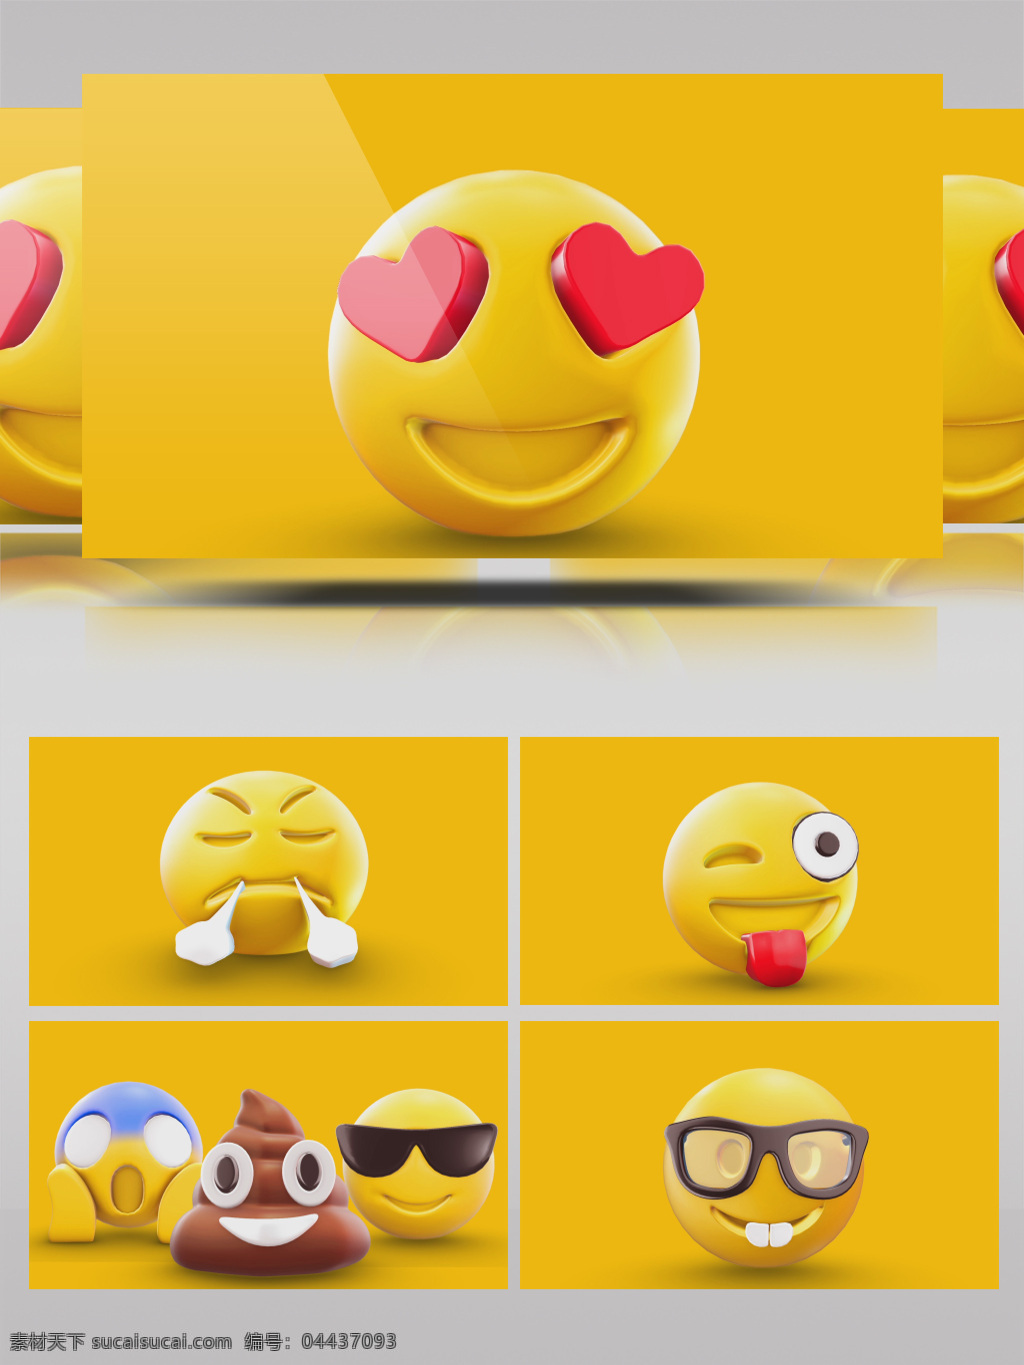 ae 卡通动画 3demoji 表情 流畅 视频素材 工程 图标 电话 笑脸 e3d制作 emoji 动画笑脸 动画动画 表情符号 符号 情感 表达 有趣 消息